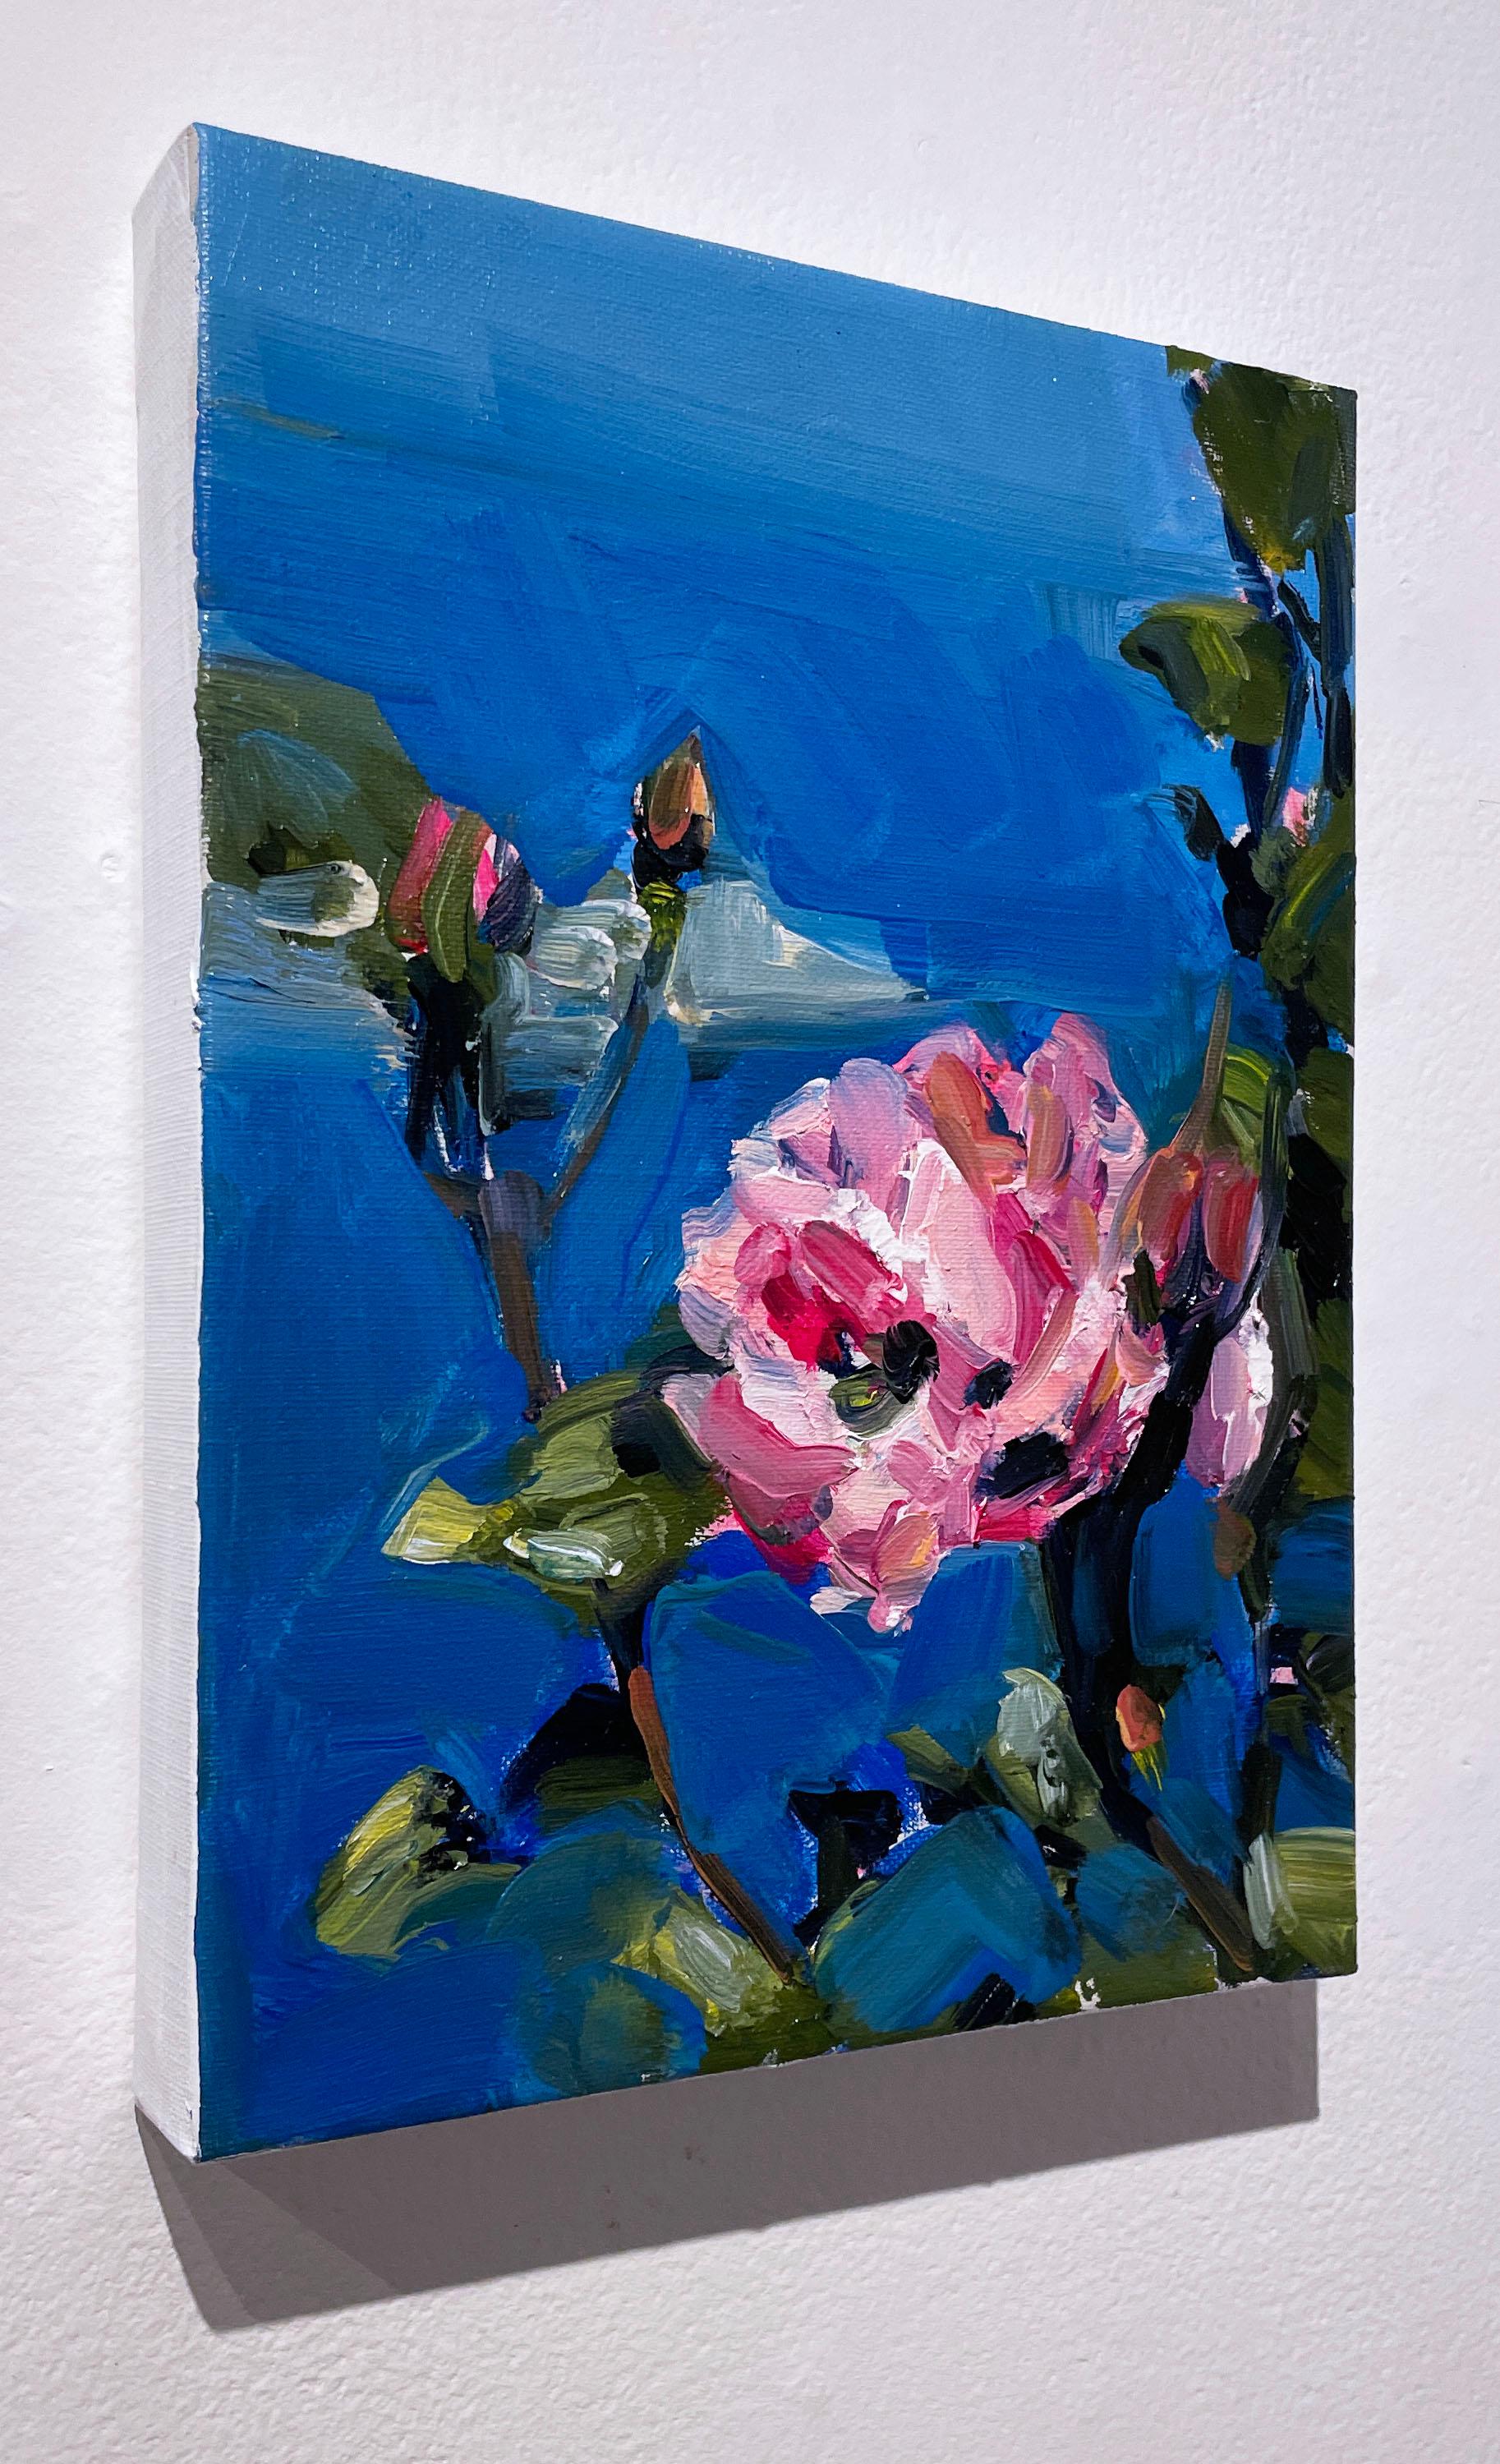 Island Rose (2022), oil on linen, impressionist landscape, flowers, island, ocean scene, water, seascape, roses, pink, azure, blue

